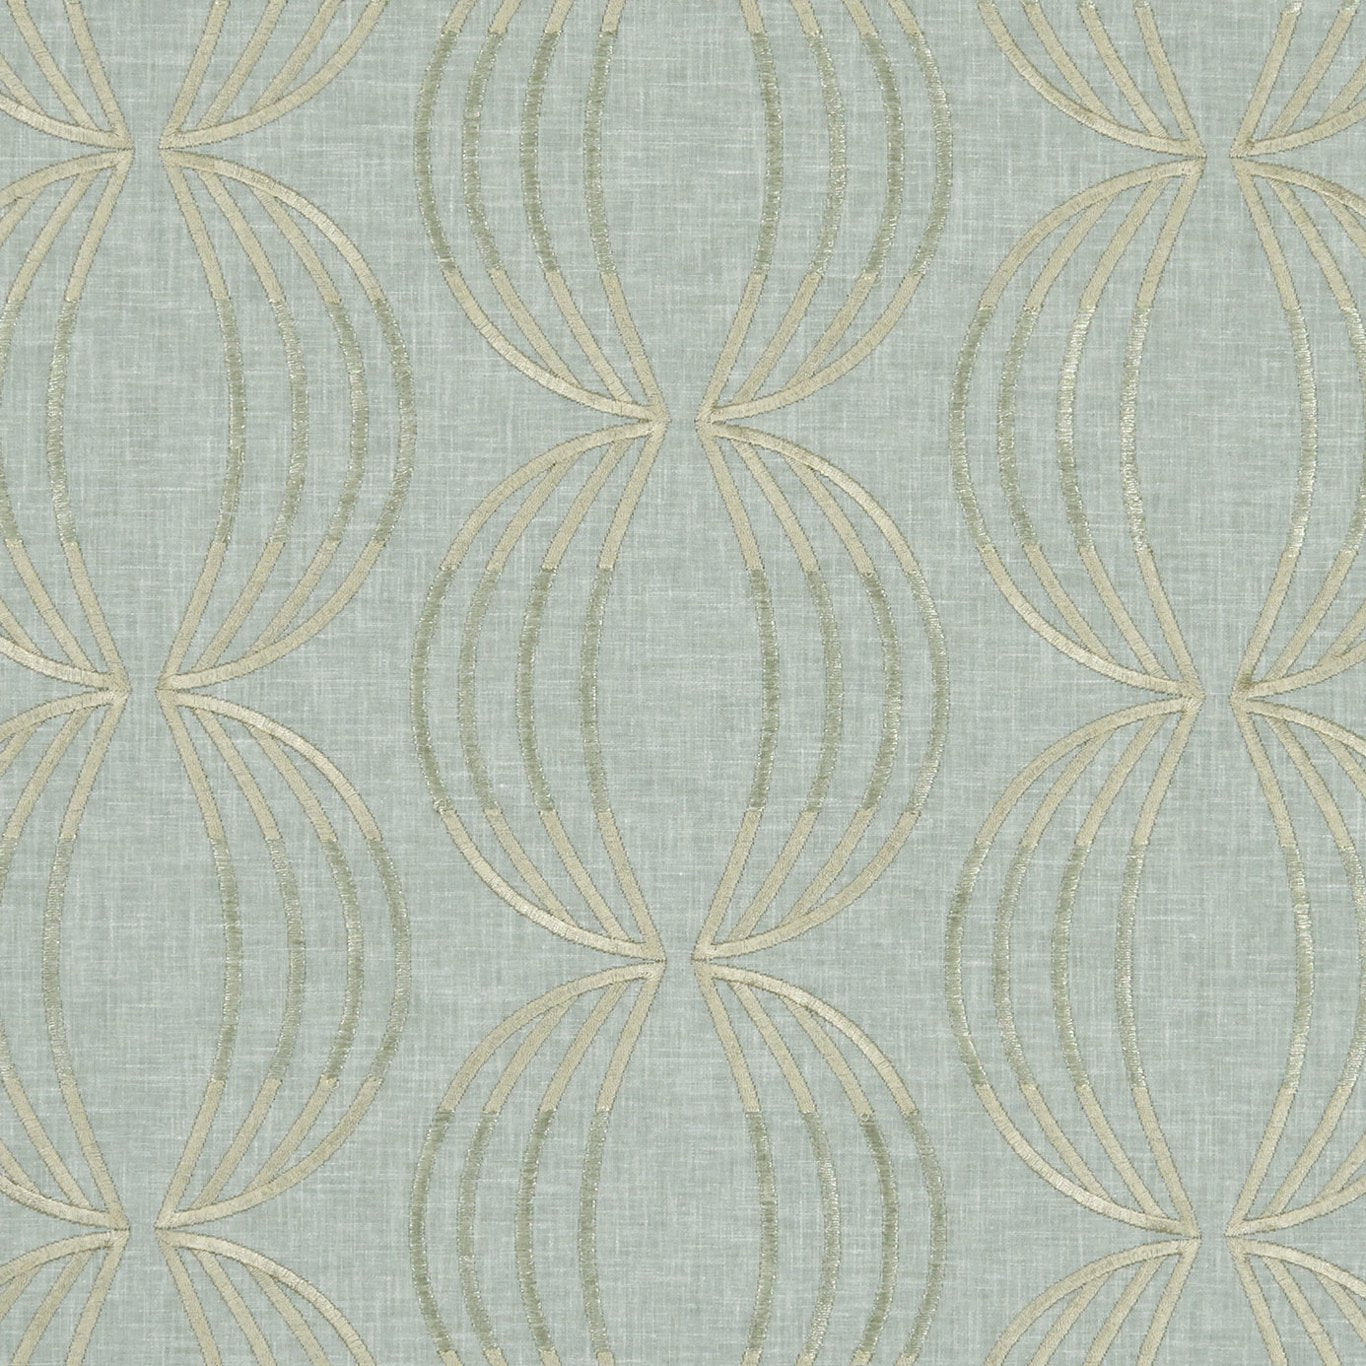 Carraway Fabric by Clarke & Clarke - F1070/04 - Mineral